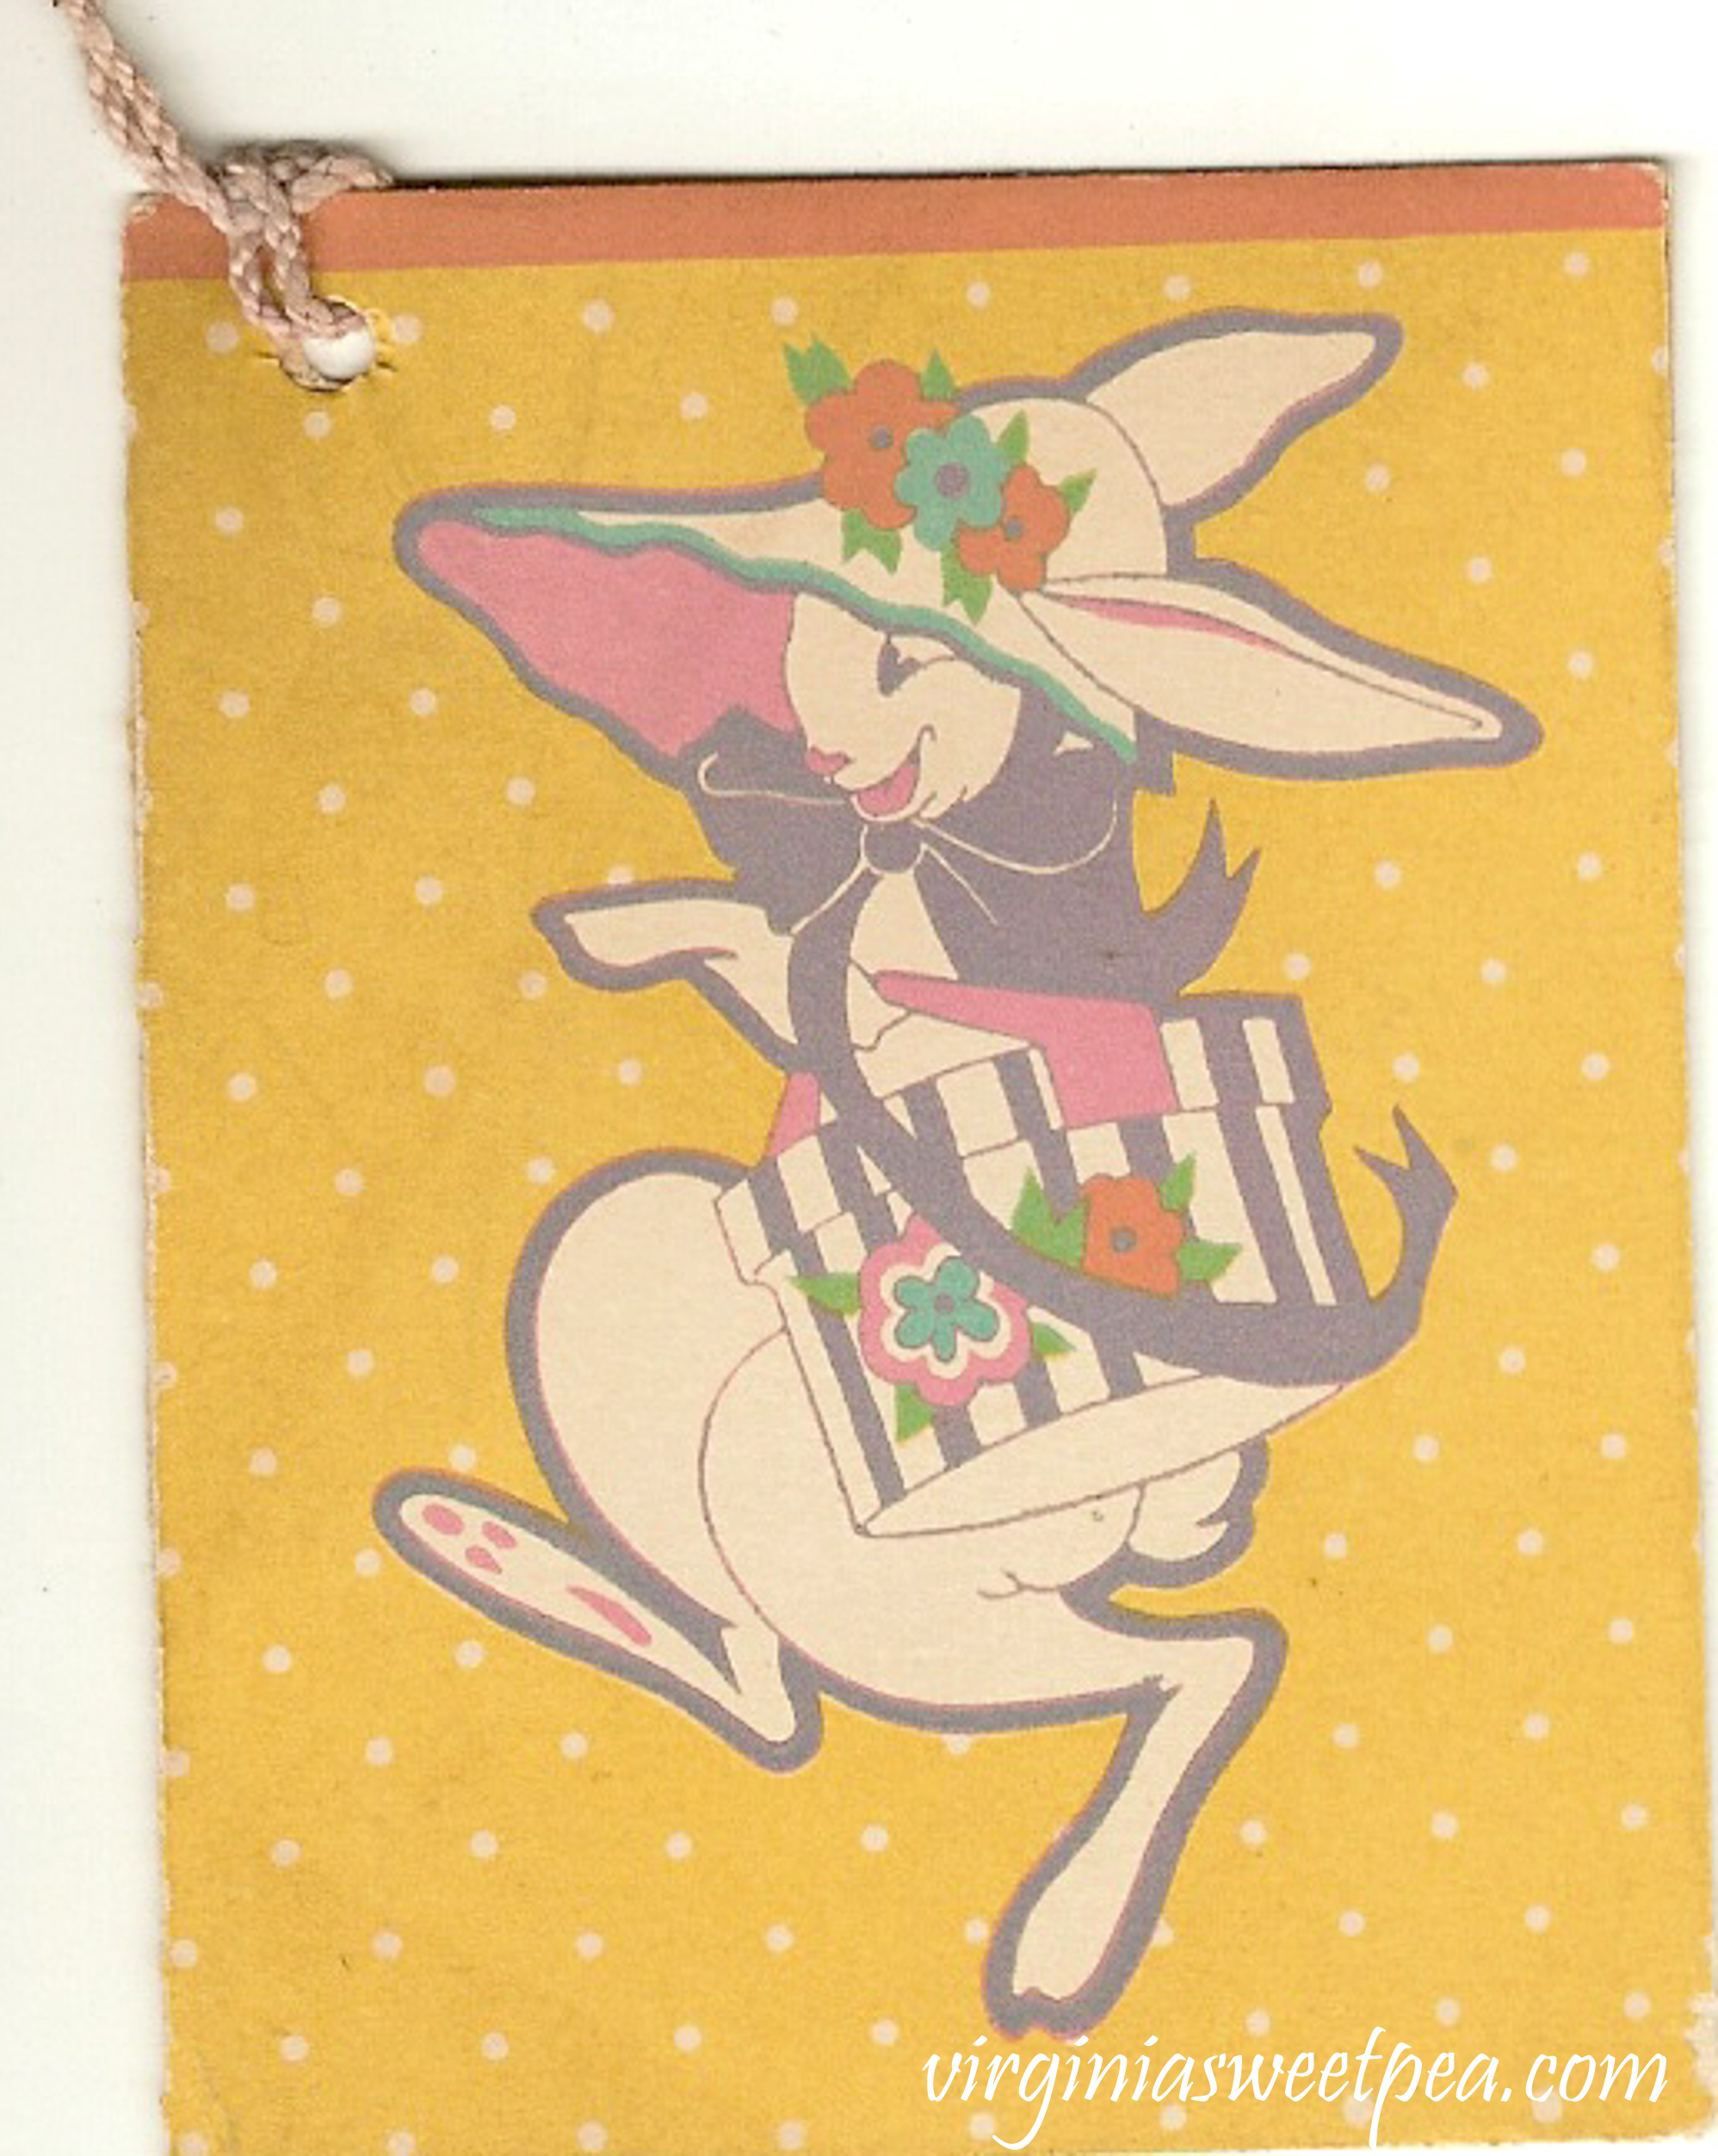 Vintage Easter Bridge Tally Card #vintage #artdeco #bridge #bridgetallycard #vintagebridgetally